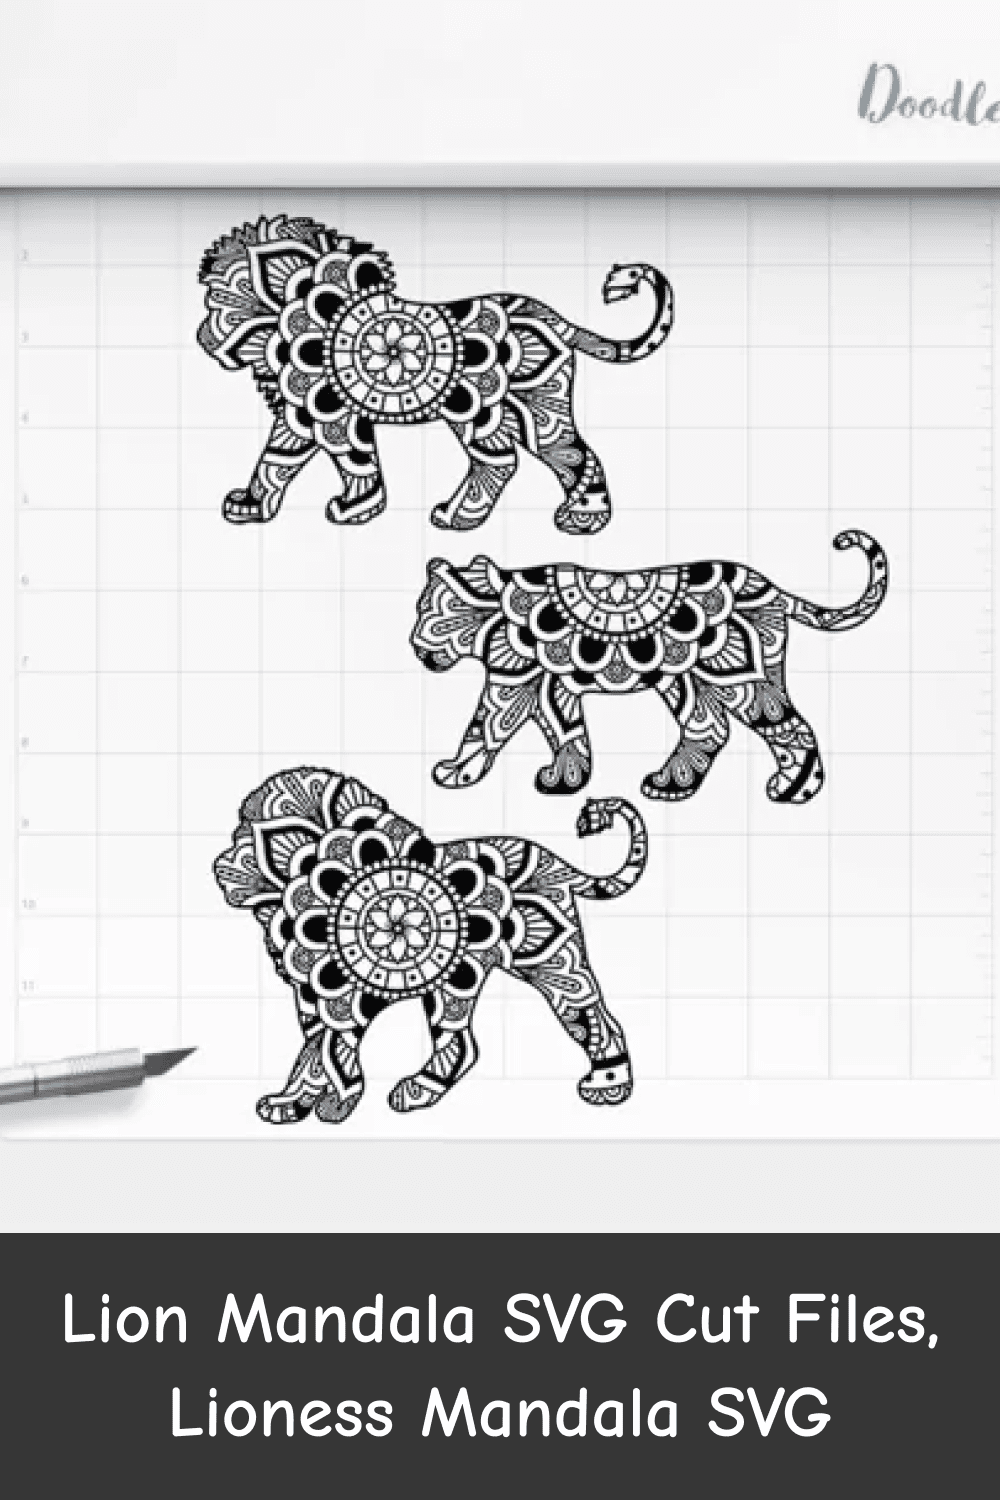 Lioness Mandala SVG.